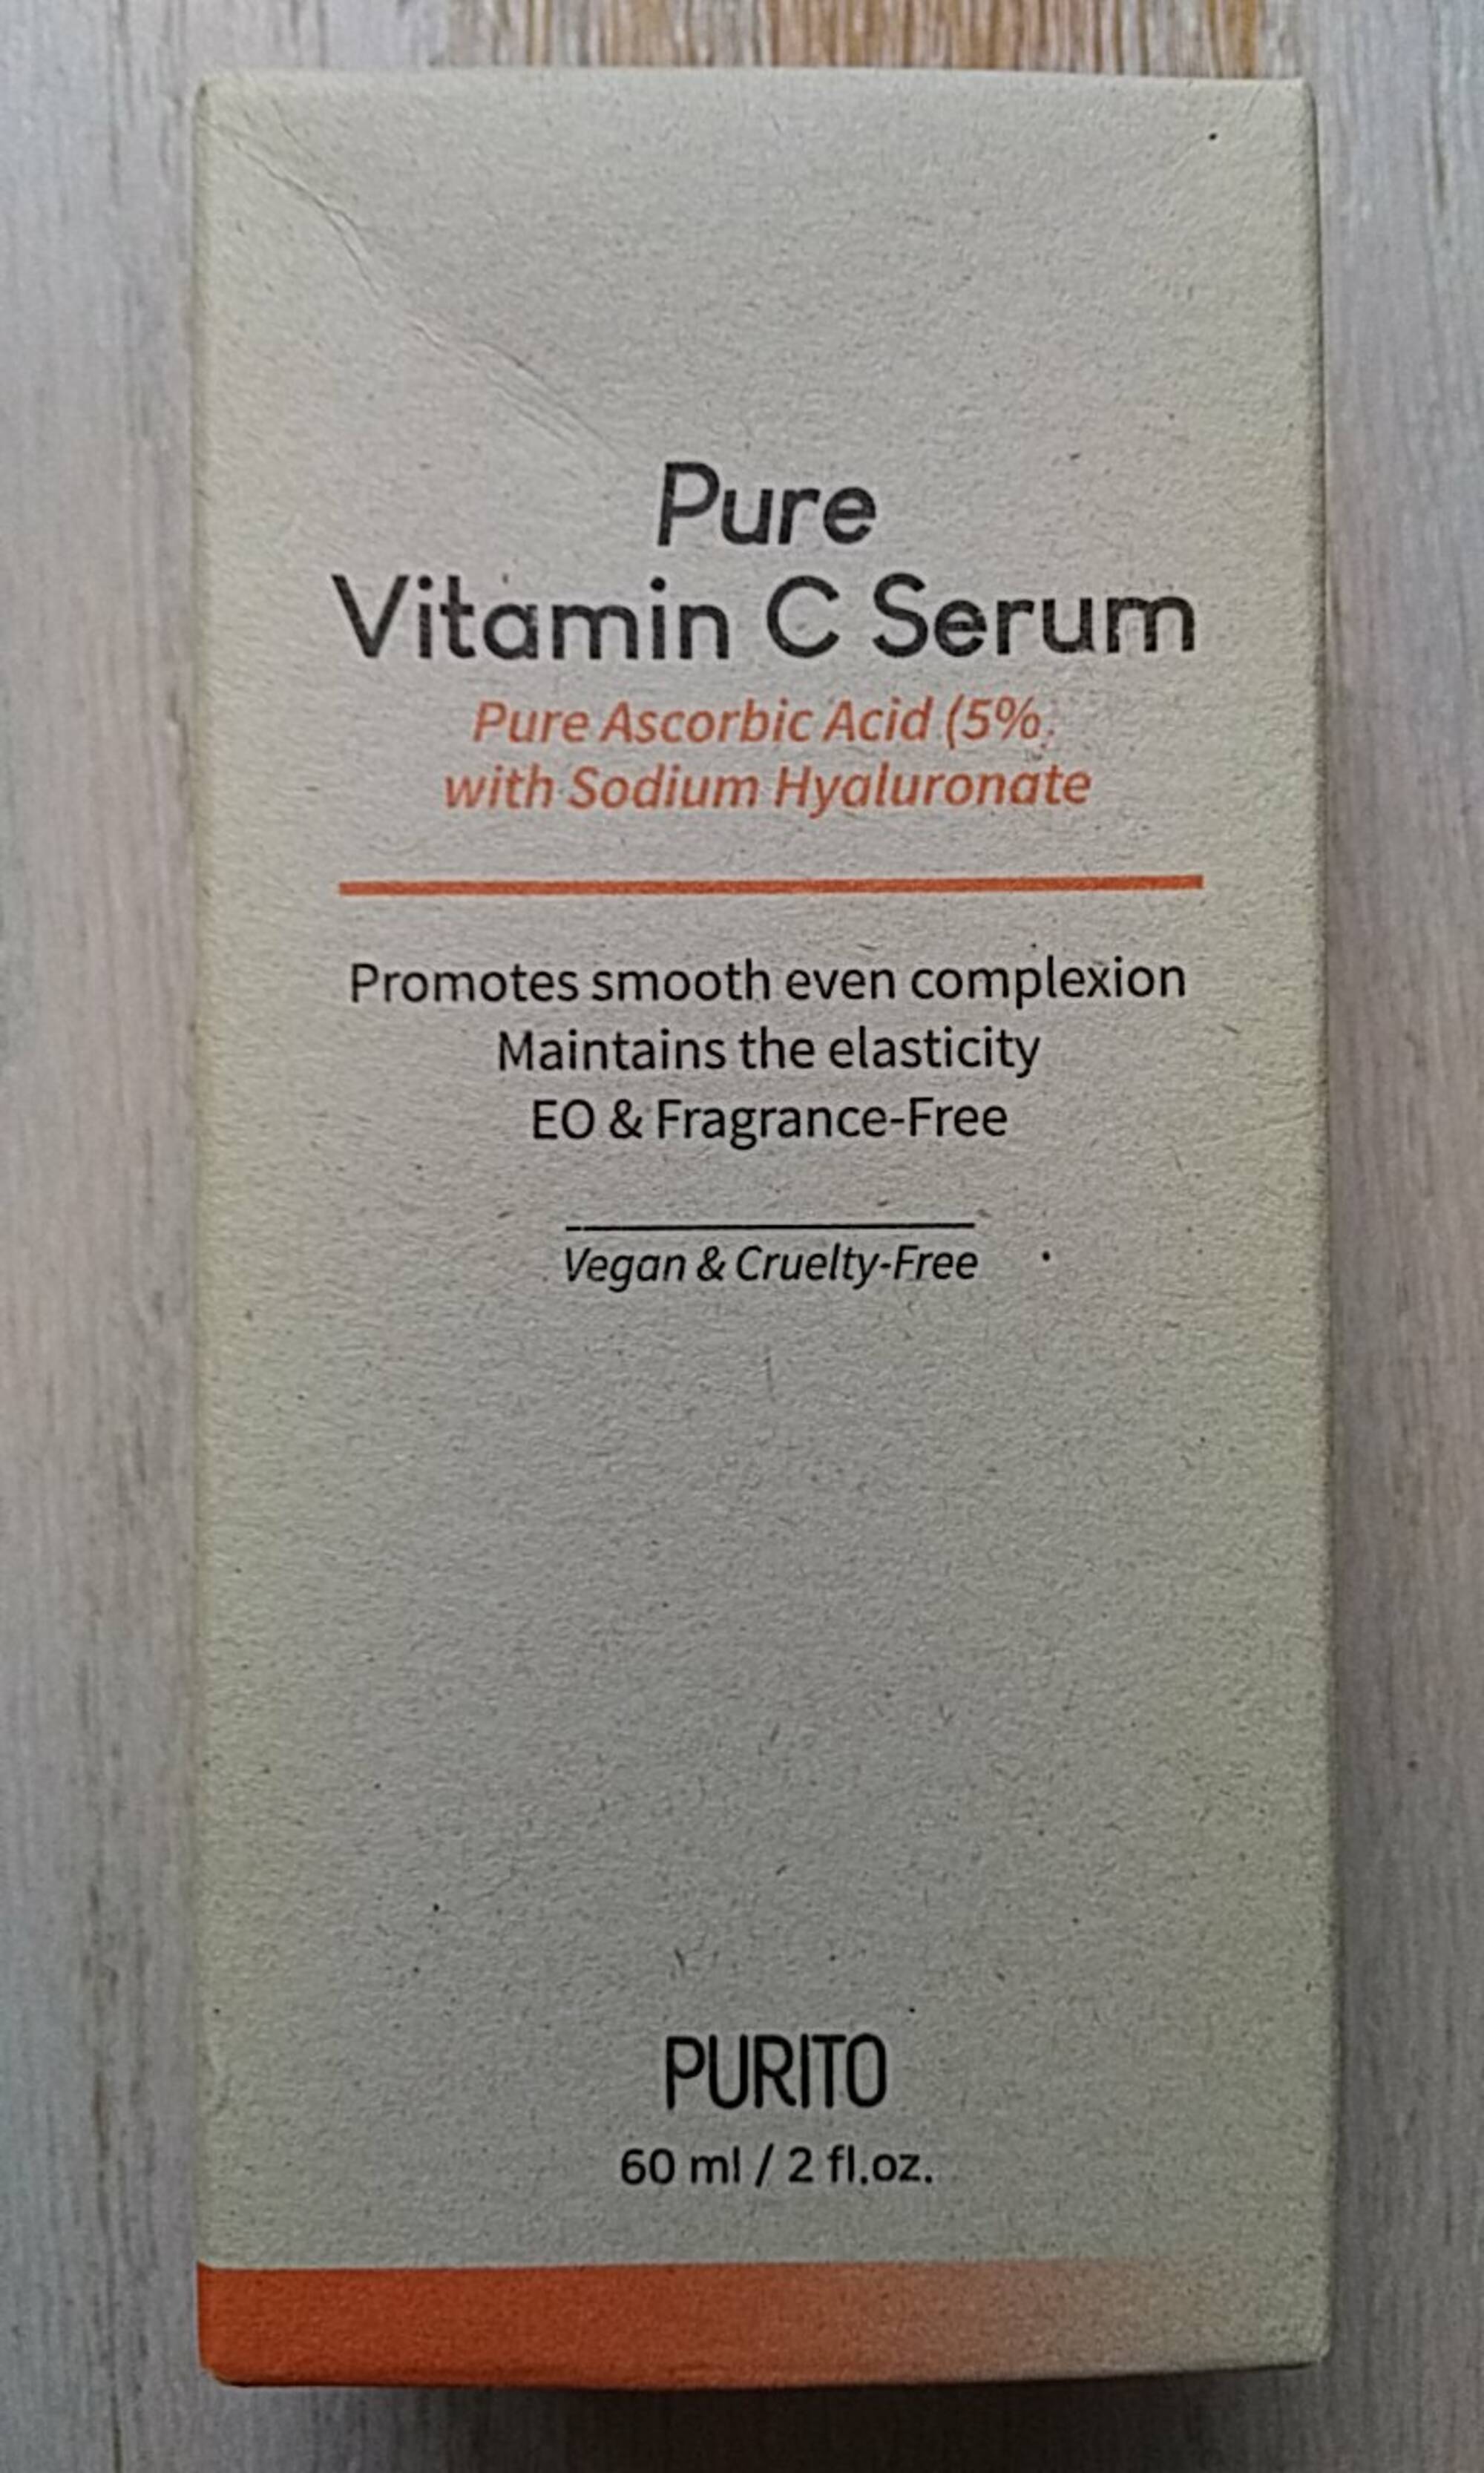 PURITO - Pure Vitamin C Serum